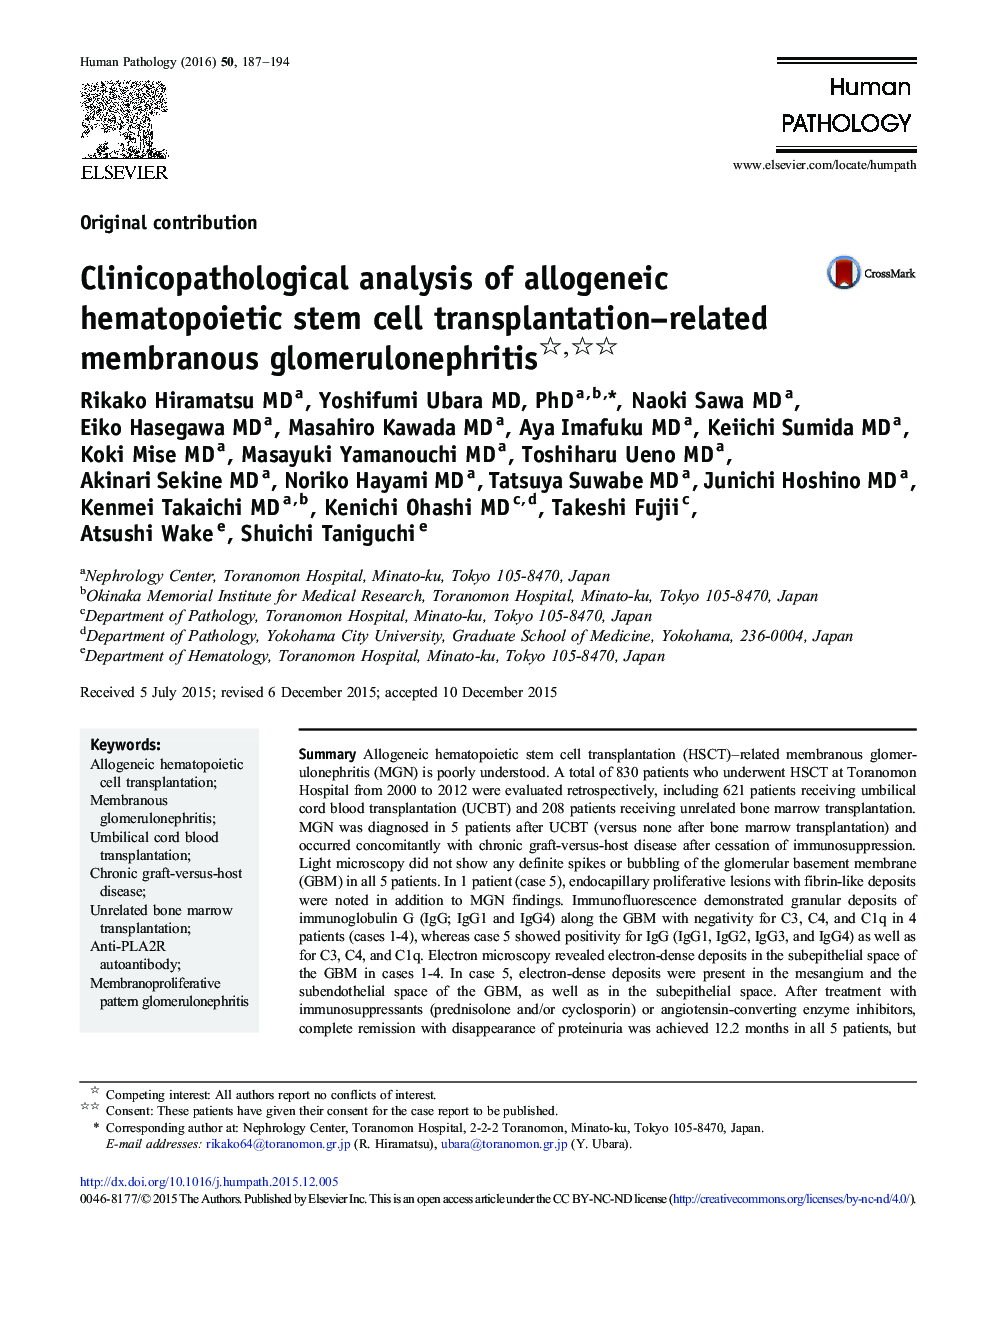 Clinicopathological analysis of allogeneic hematopoietic stem cell transplantation-related membranous glomerulonephritis